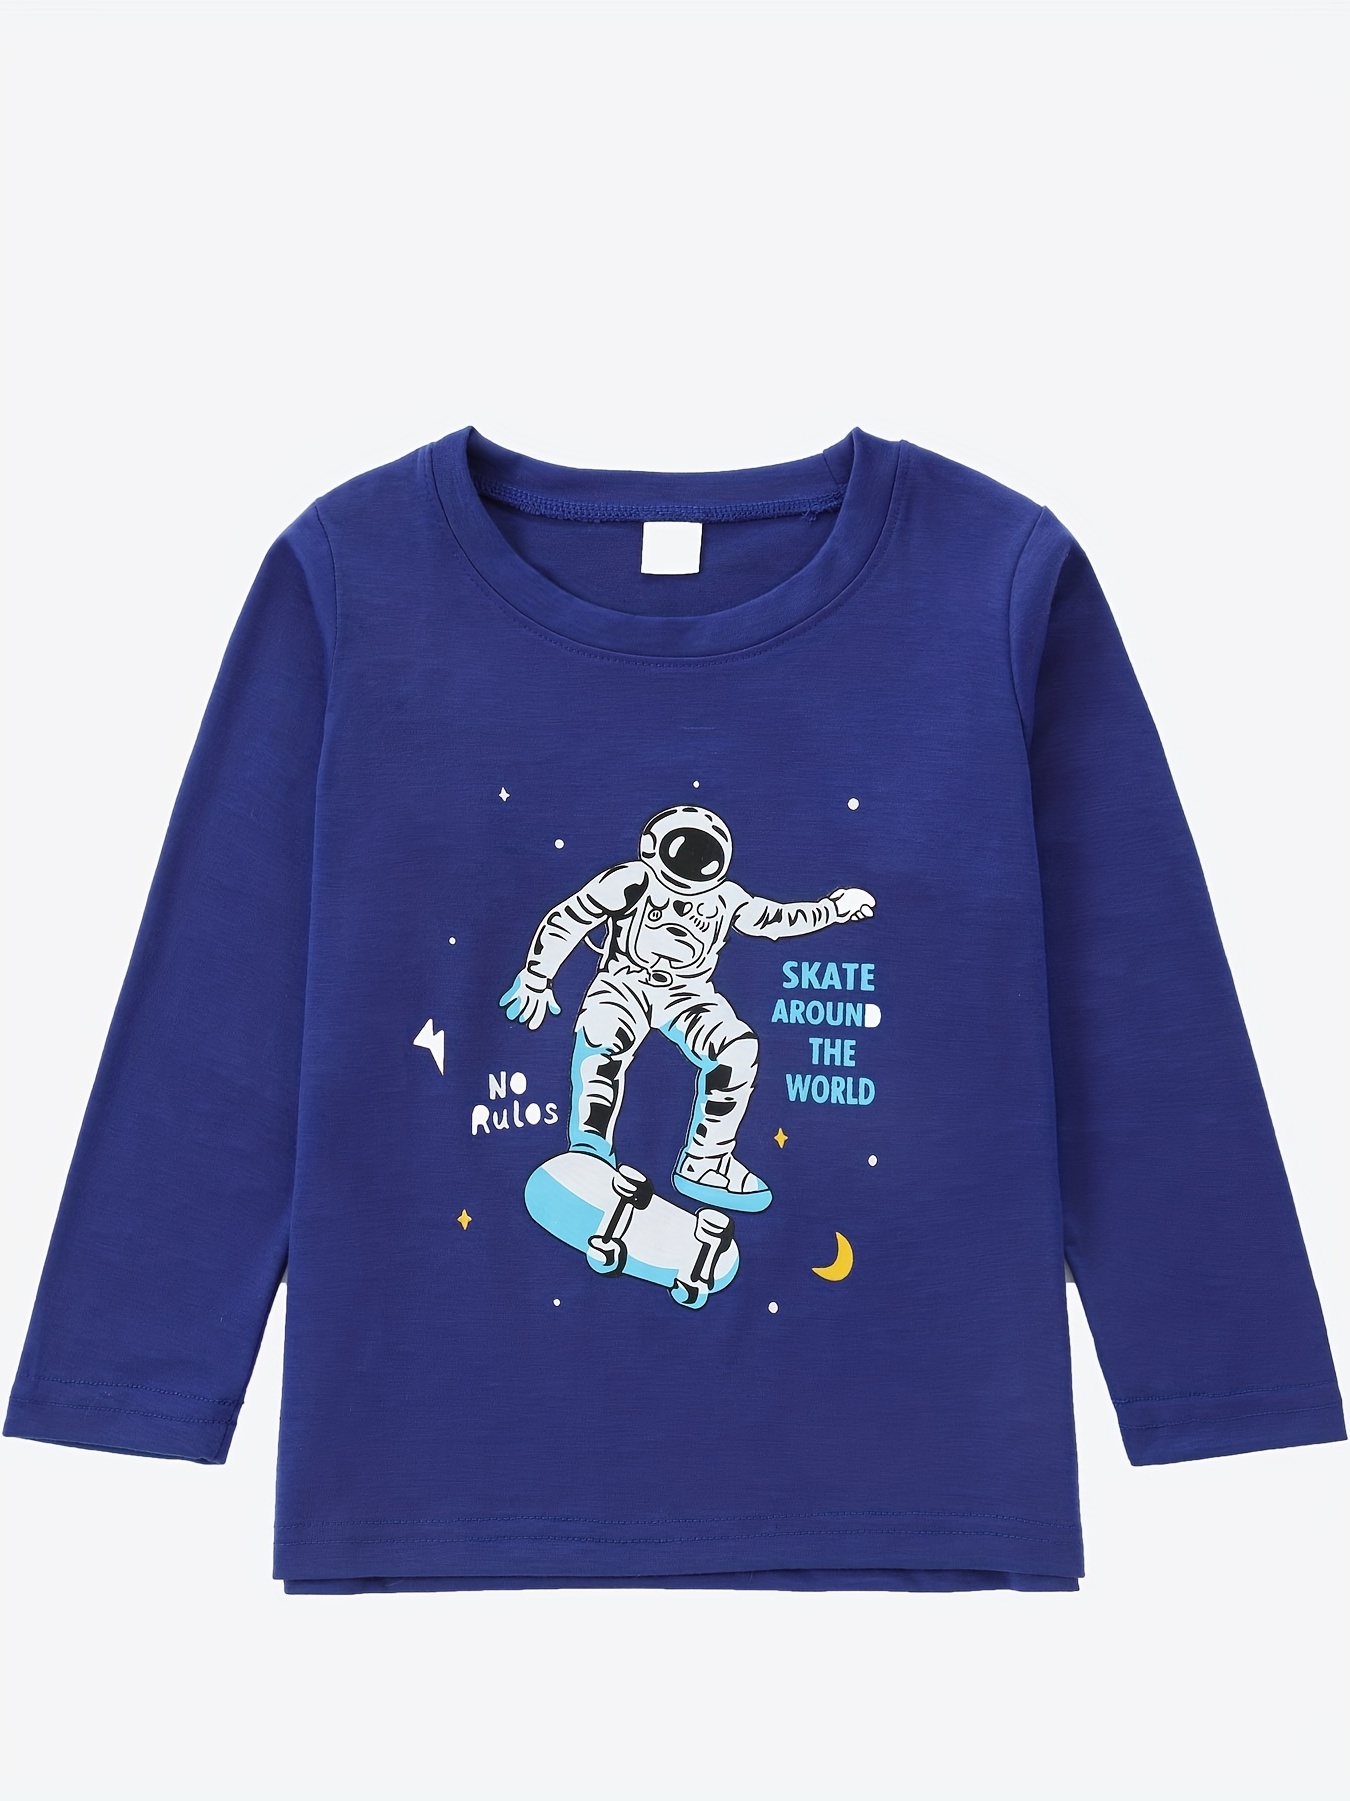 Blue Skateboard Youth T-Shirt